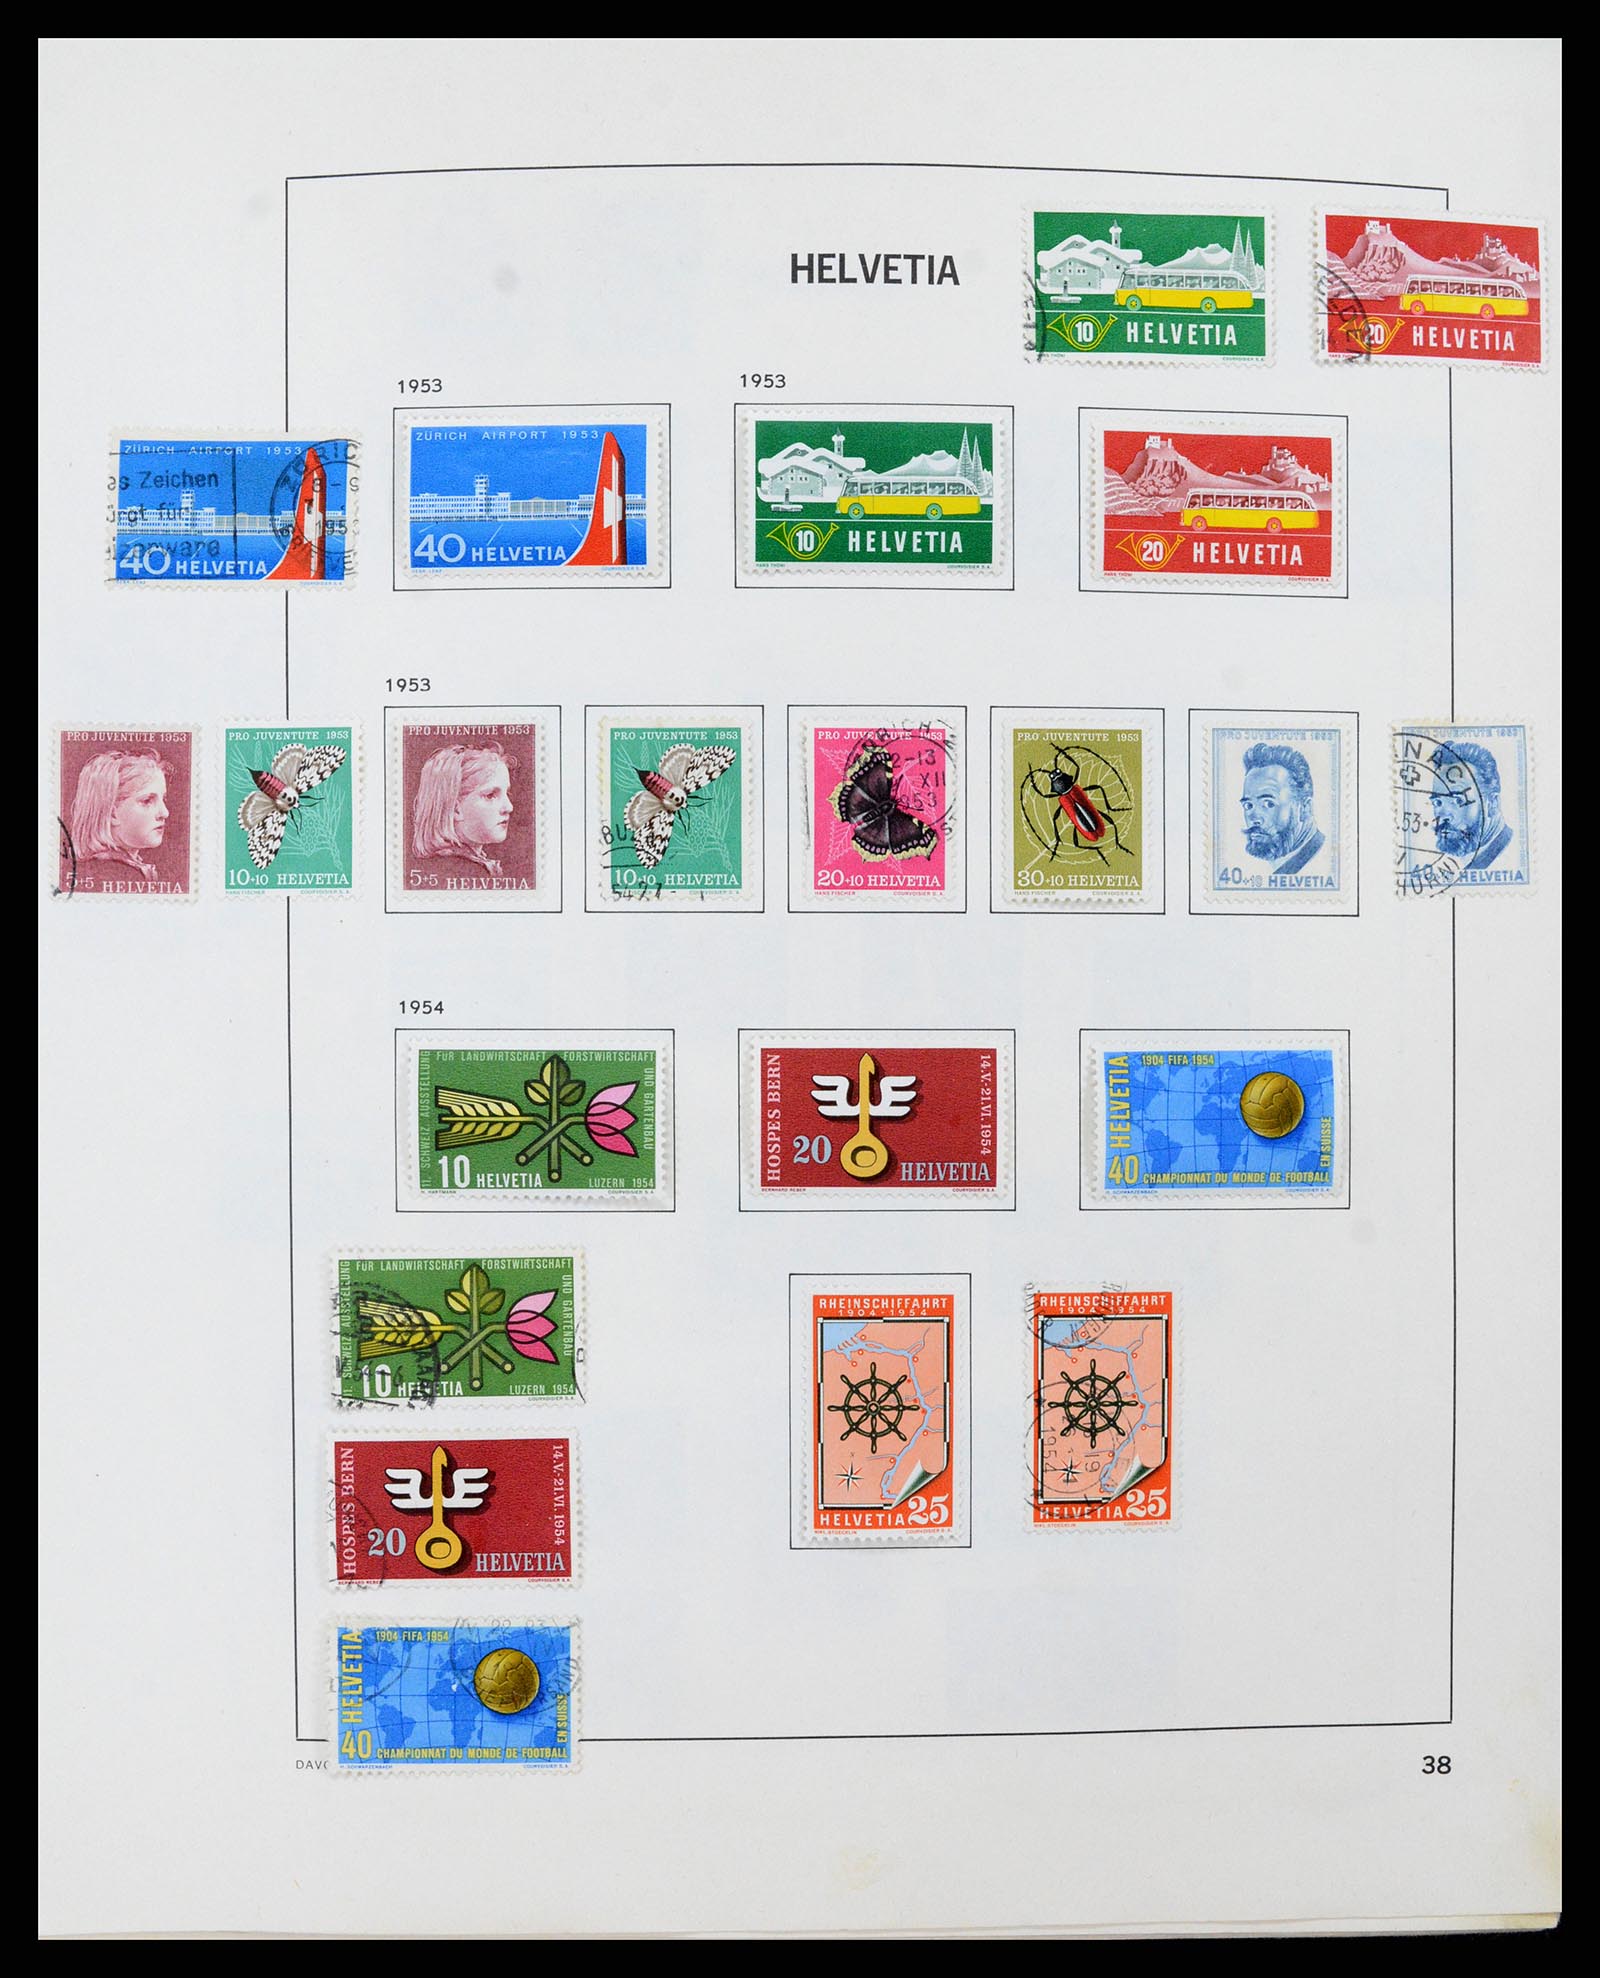 37496 037 - Stamp collection 37496 Switzerland 1854-2002.